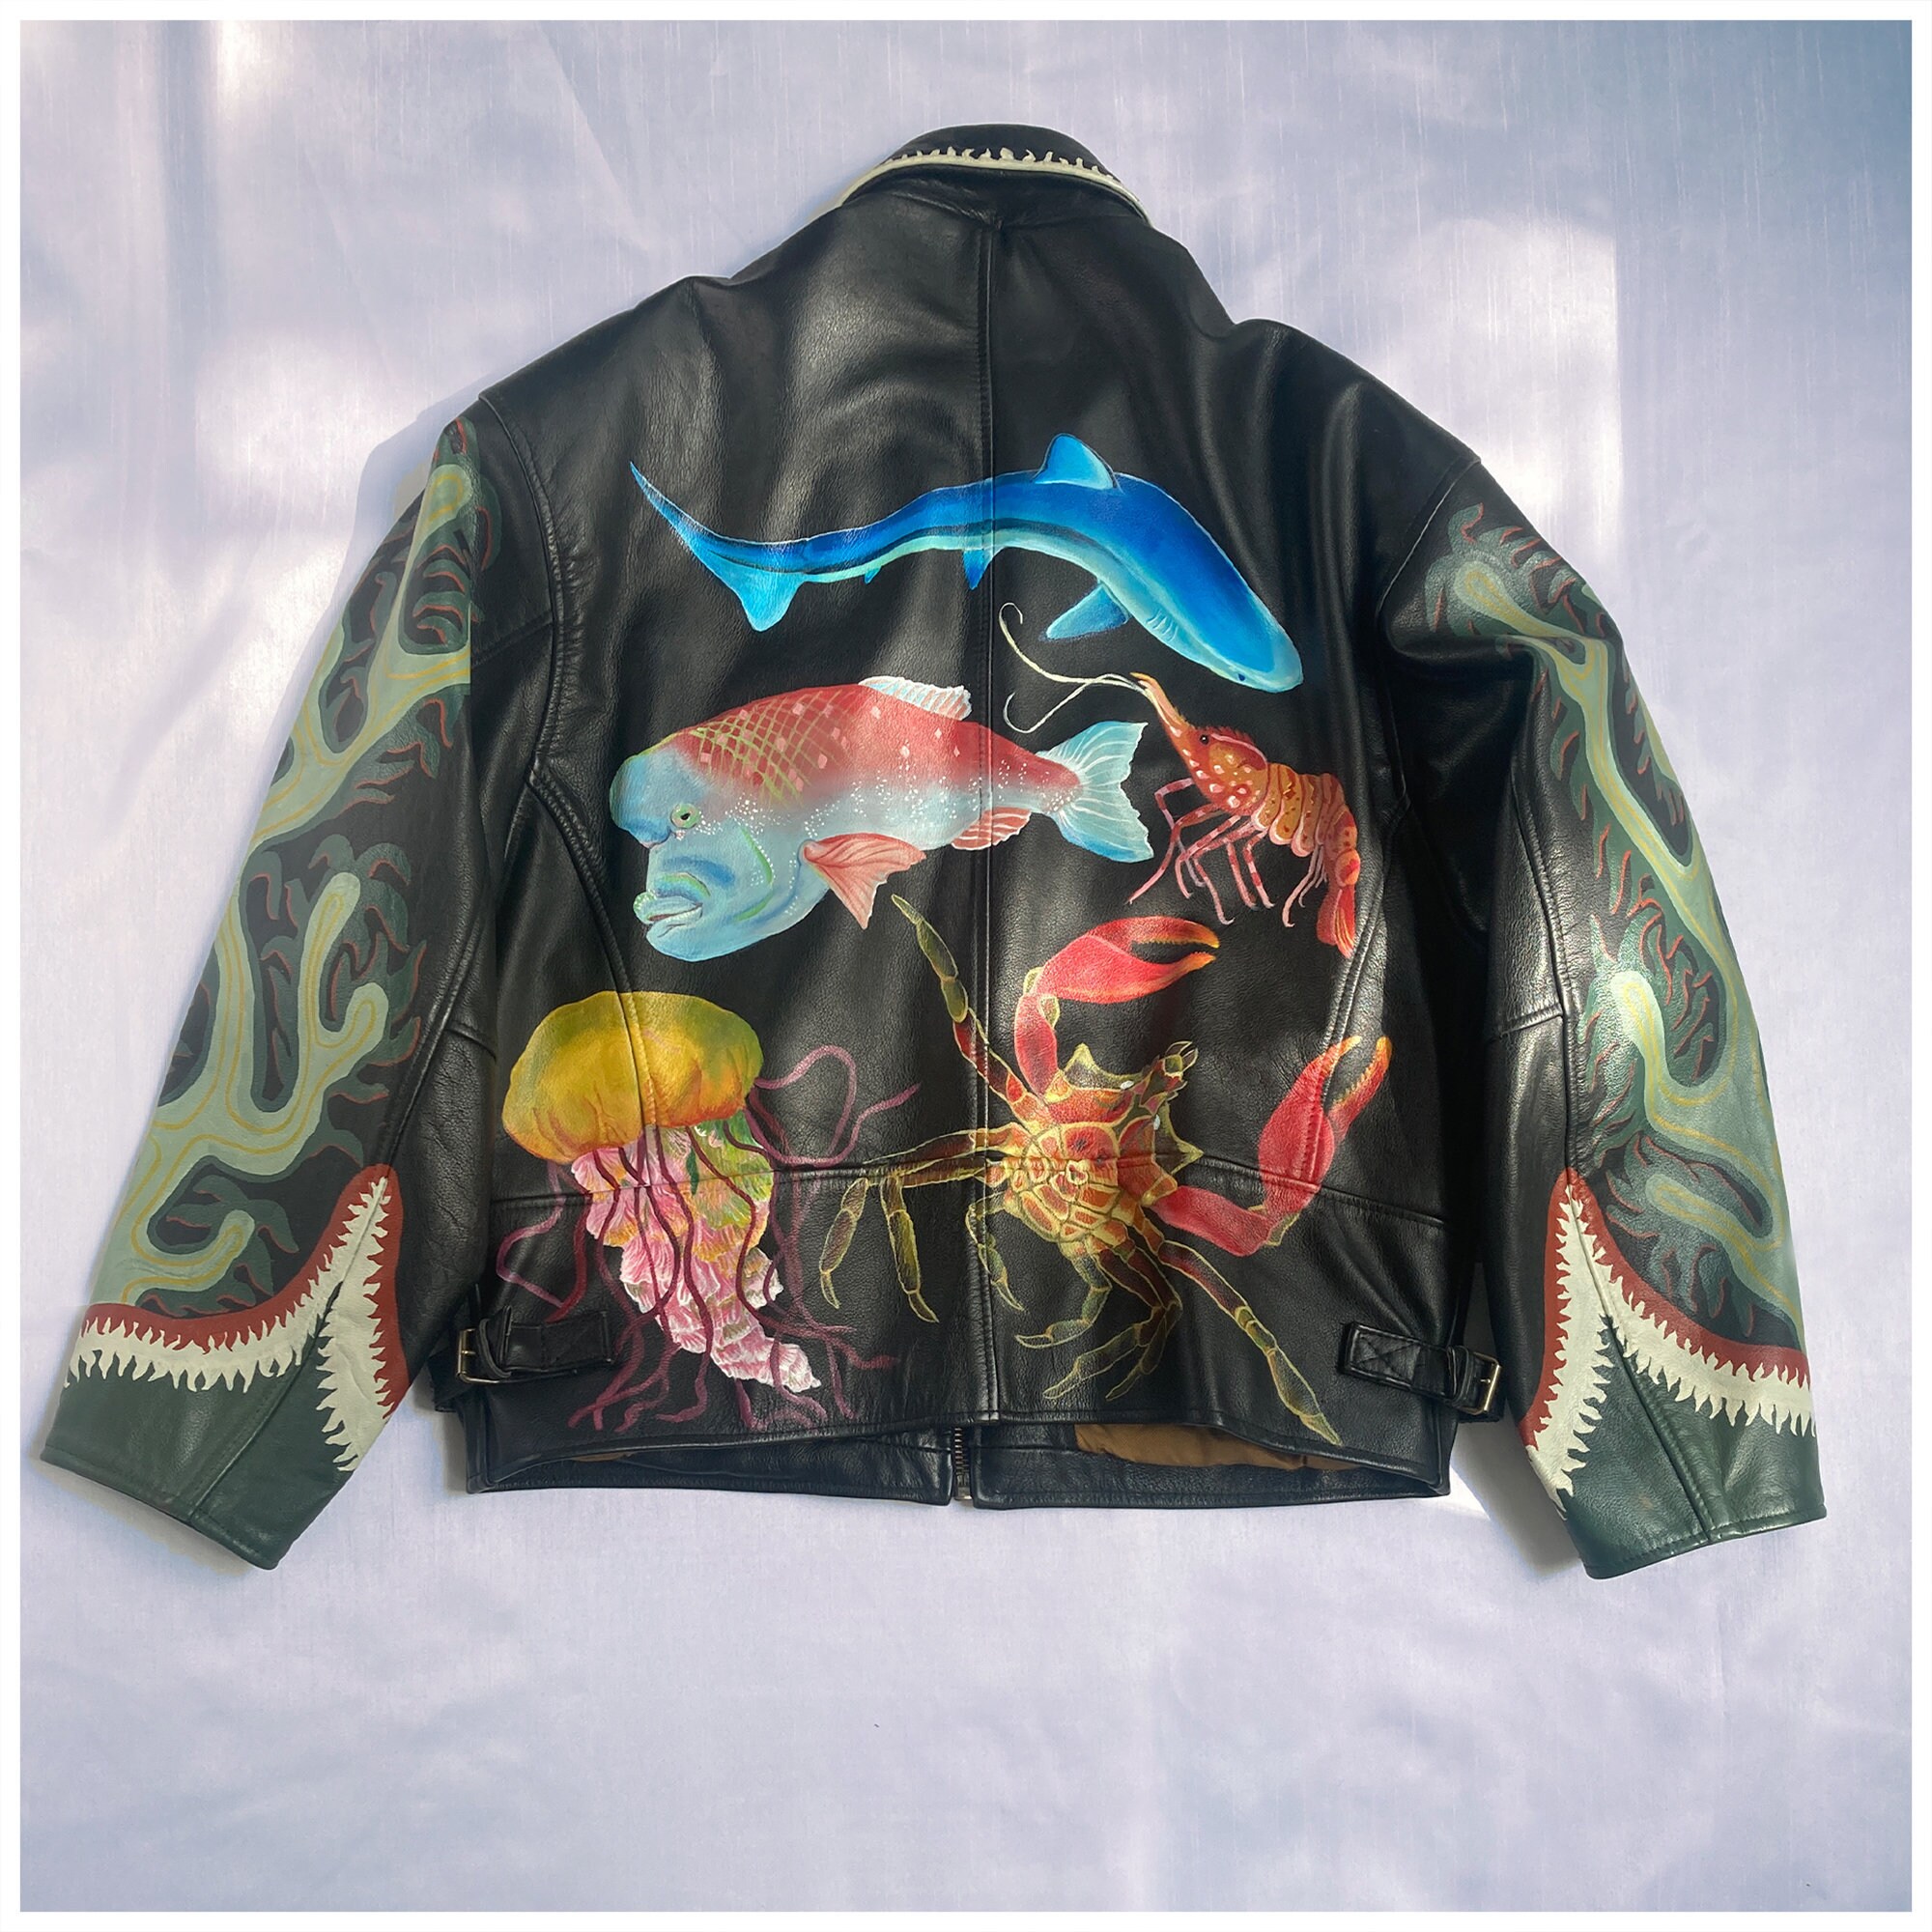 Hand-painted vintage leather jacket | Etsy